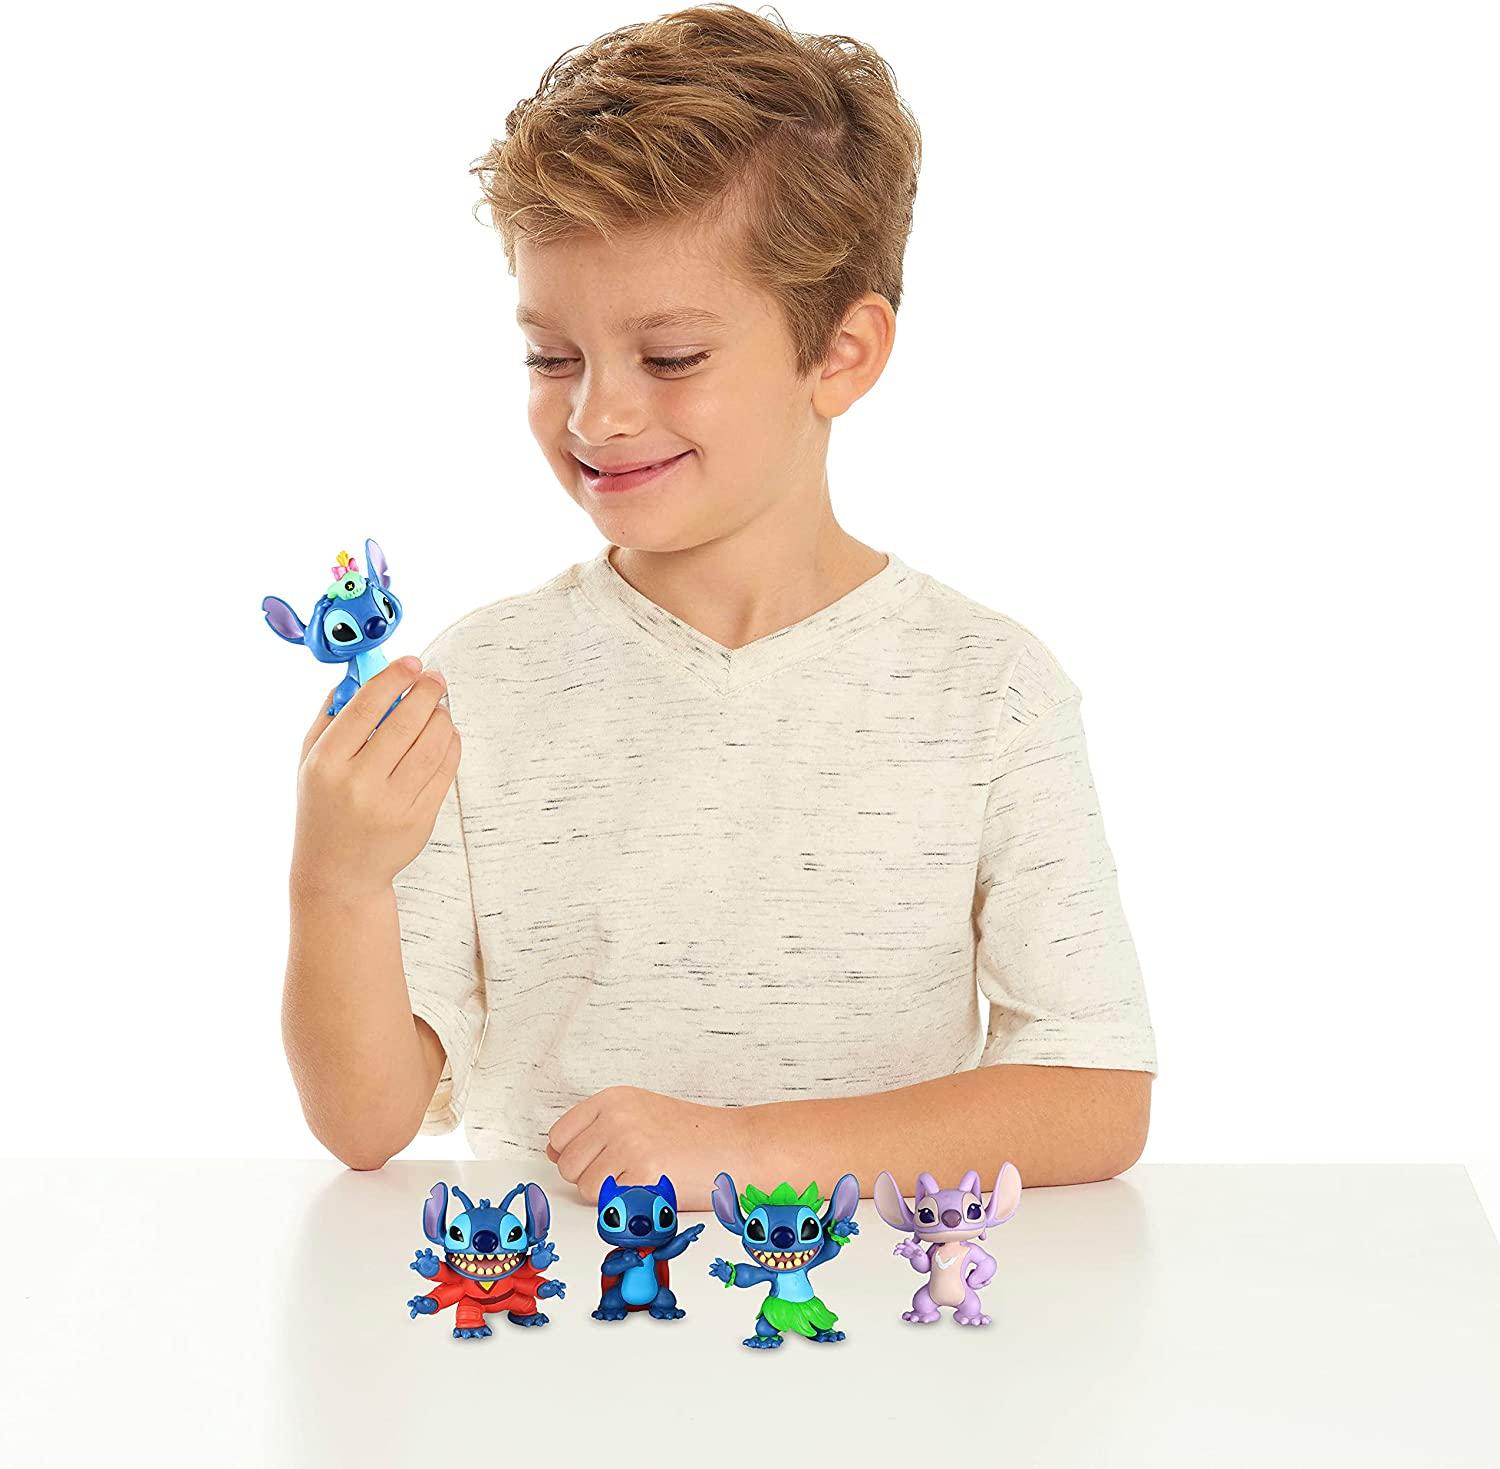 Disneys Lilo & Stitch Collectible Stitch Figure Set, 5-pieces, by